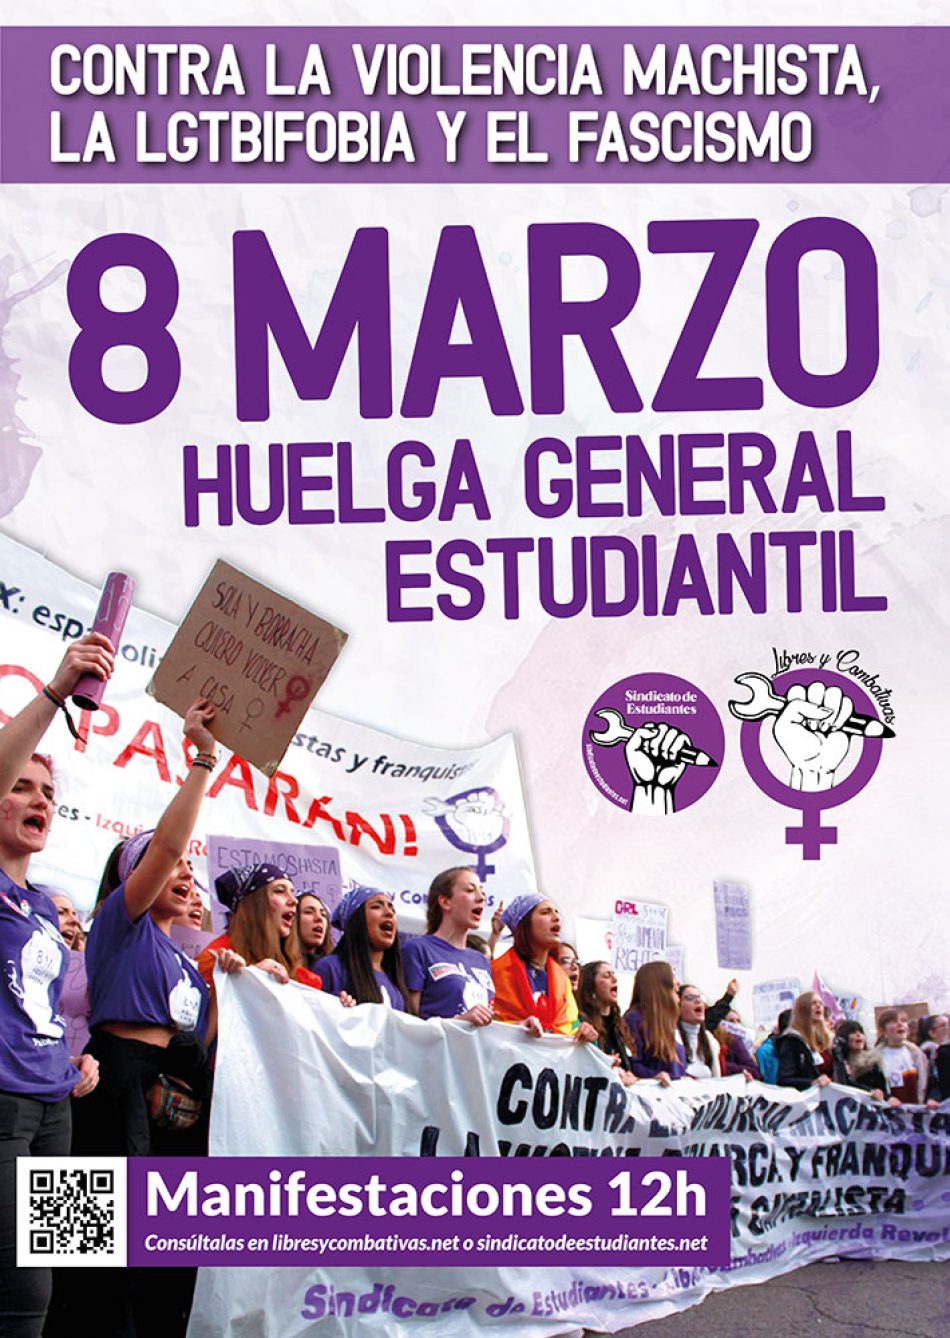 8 Marzo, Huelga General Estudiantil. ¡Contra la violencia machista, la LGTBIfobia y el fascismo!